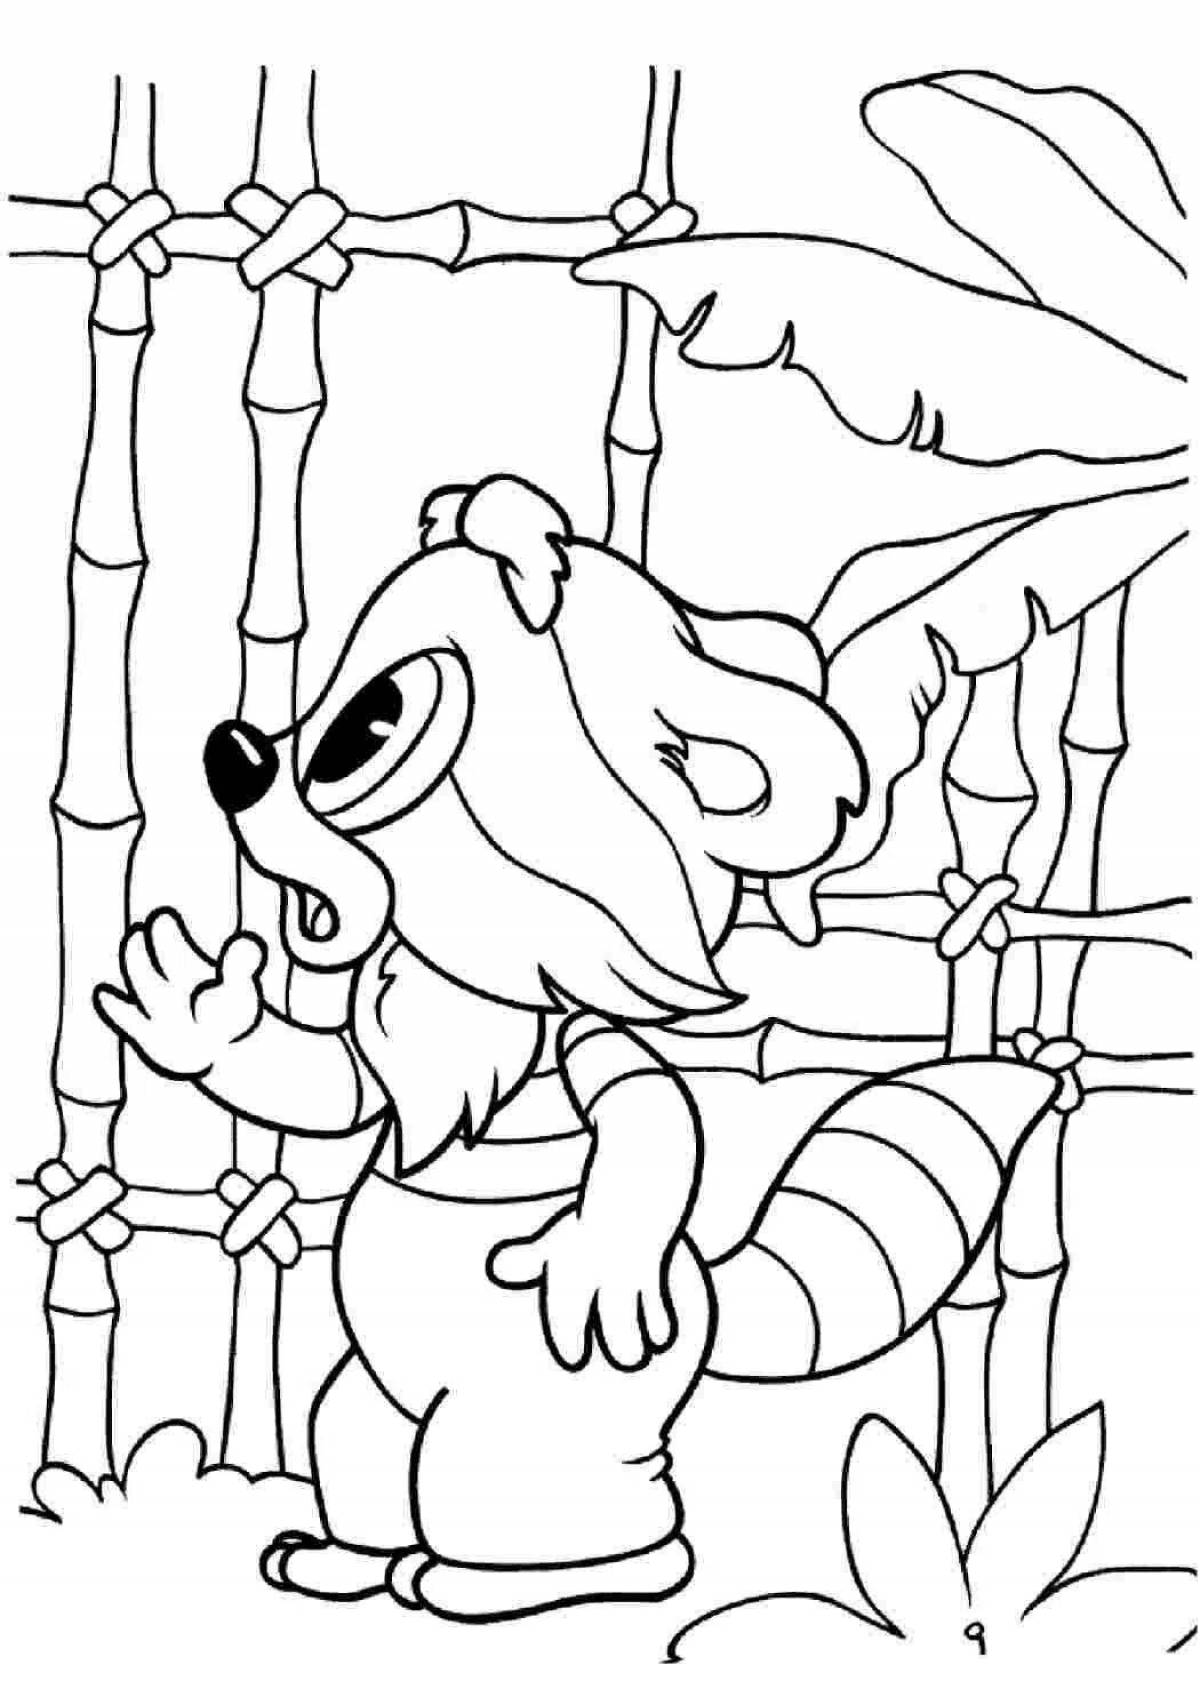 Fun coloring cartoon raccoon for kids